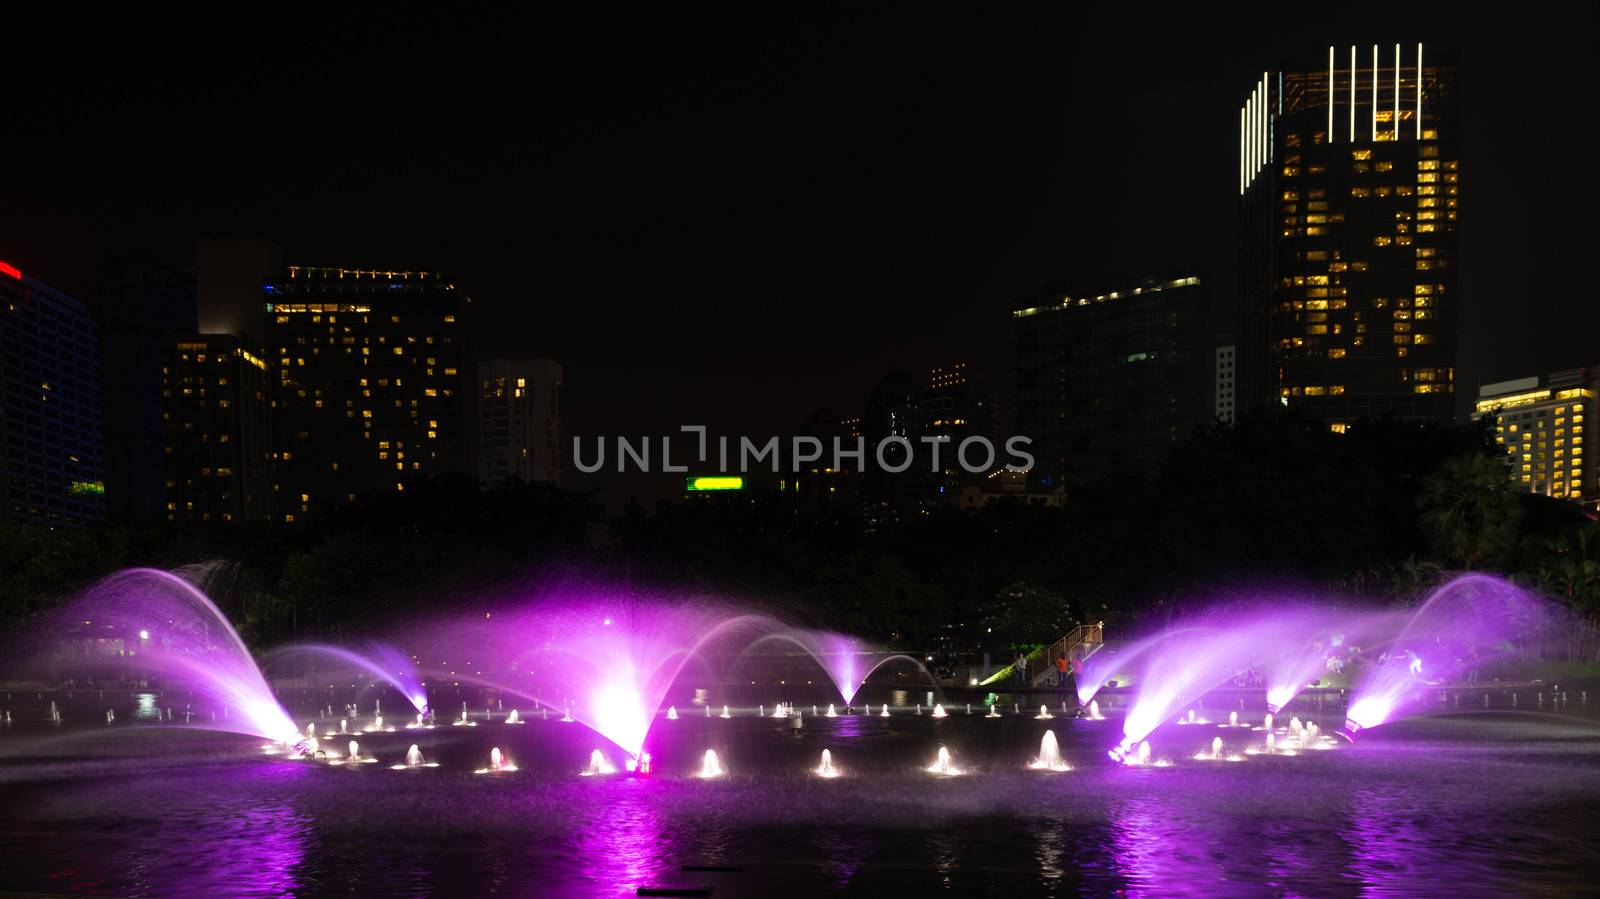 Illuminated fountain at night in modern city by iryna_rasko